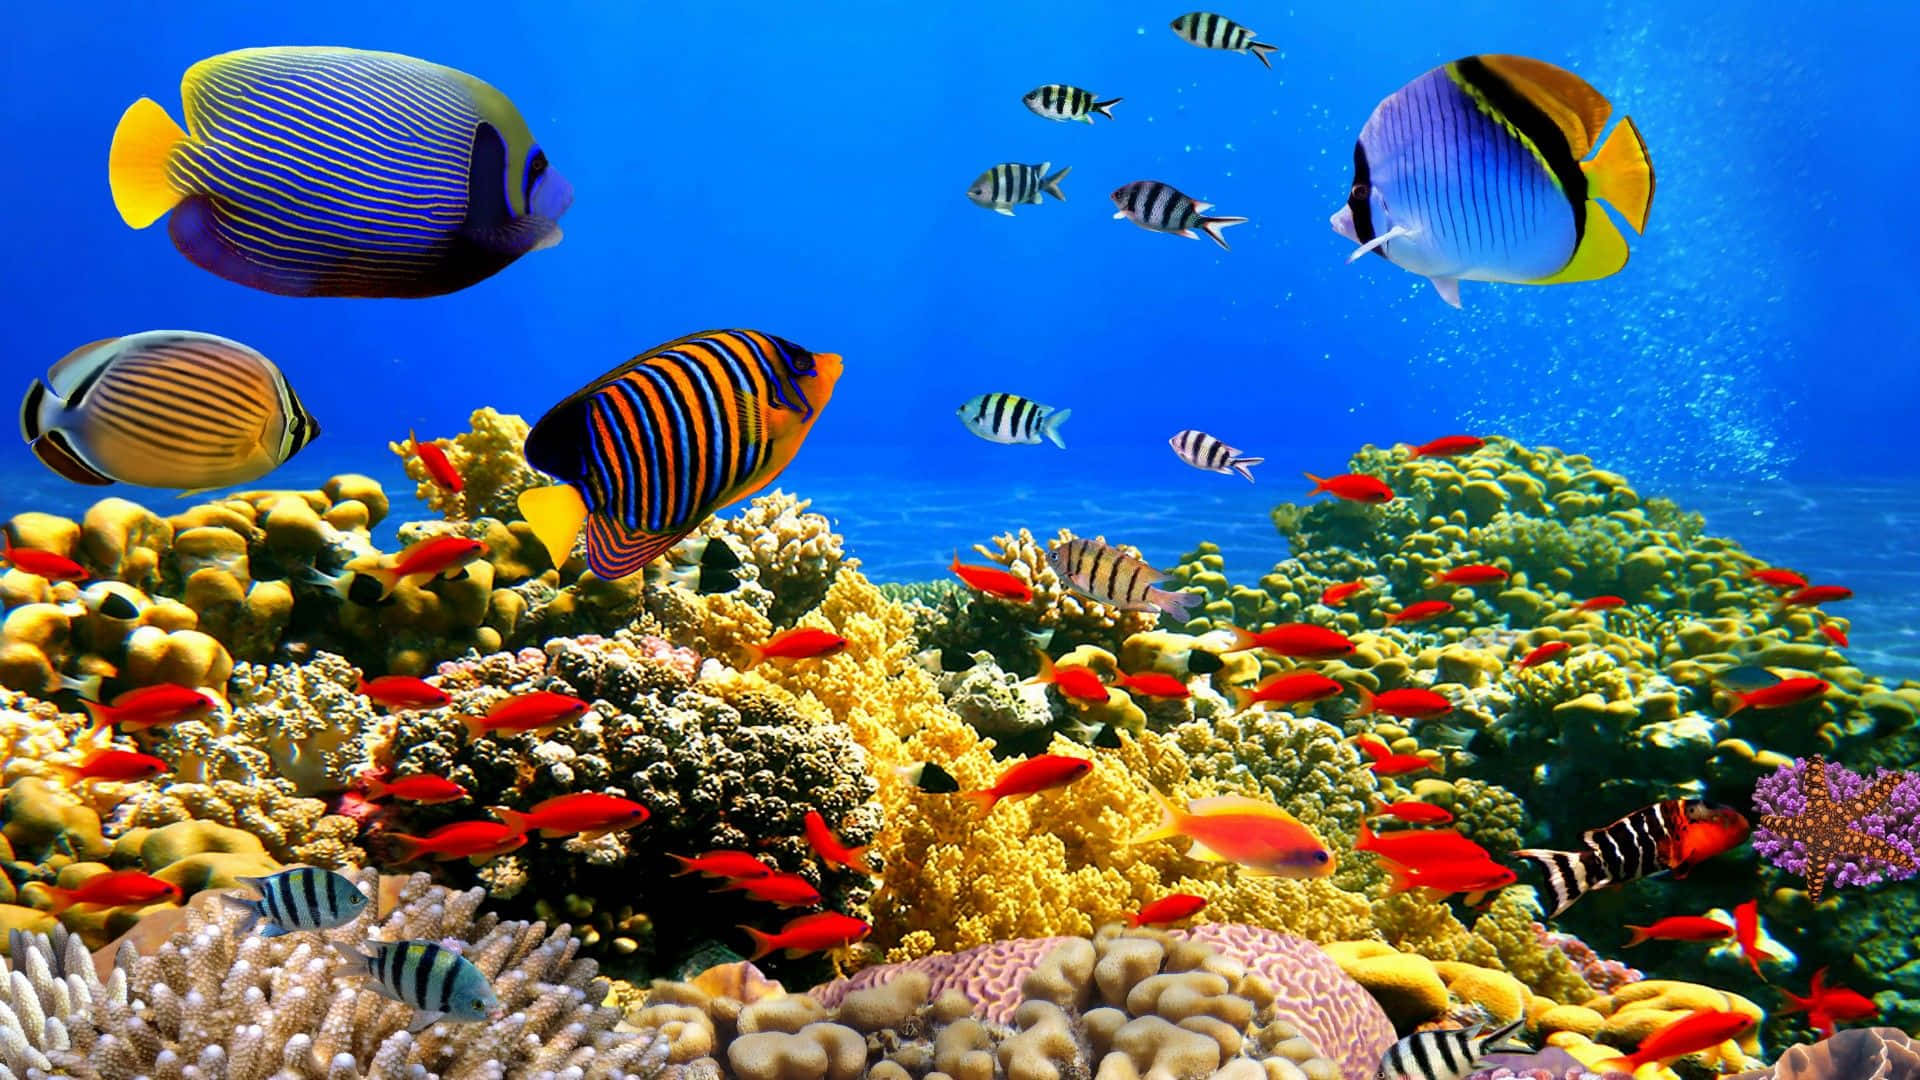 Download Fish Desktop Wallpaper | Wallpapers.com